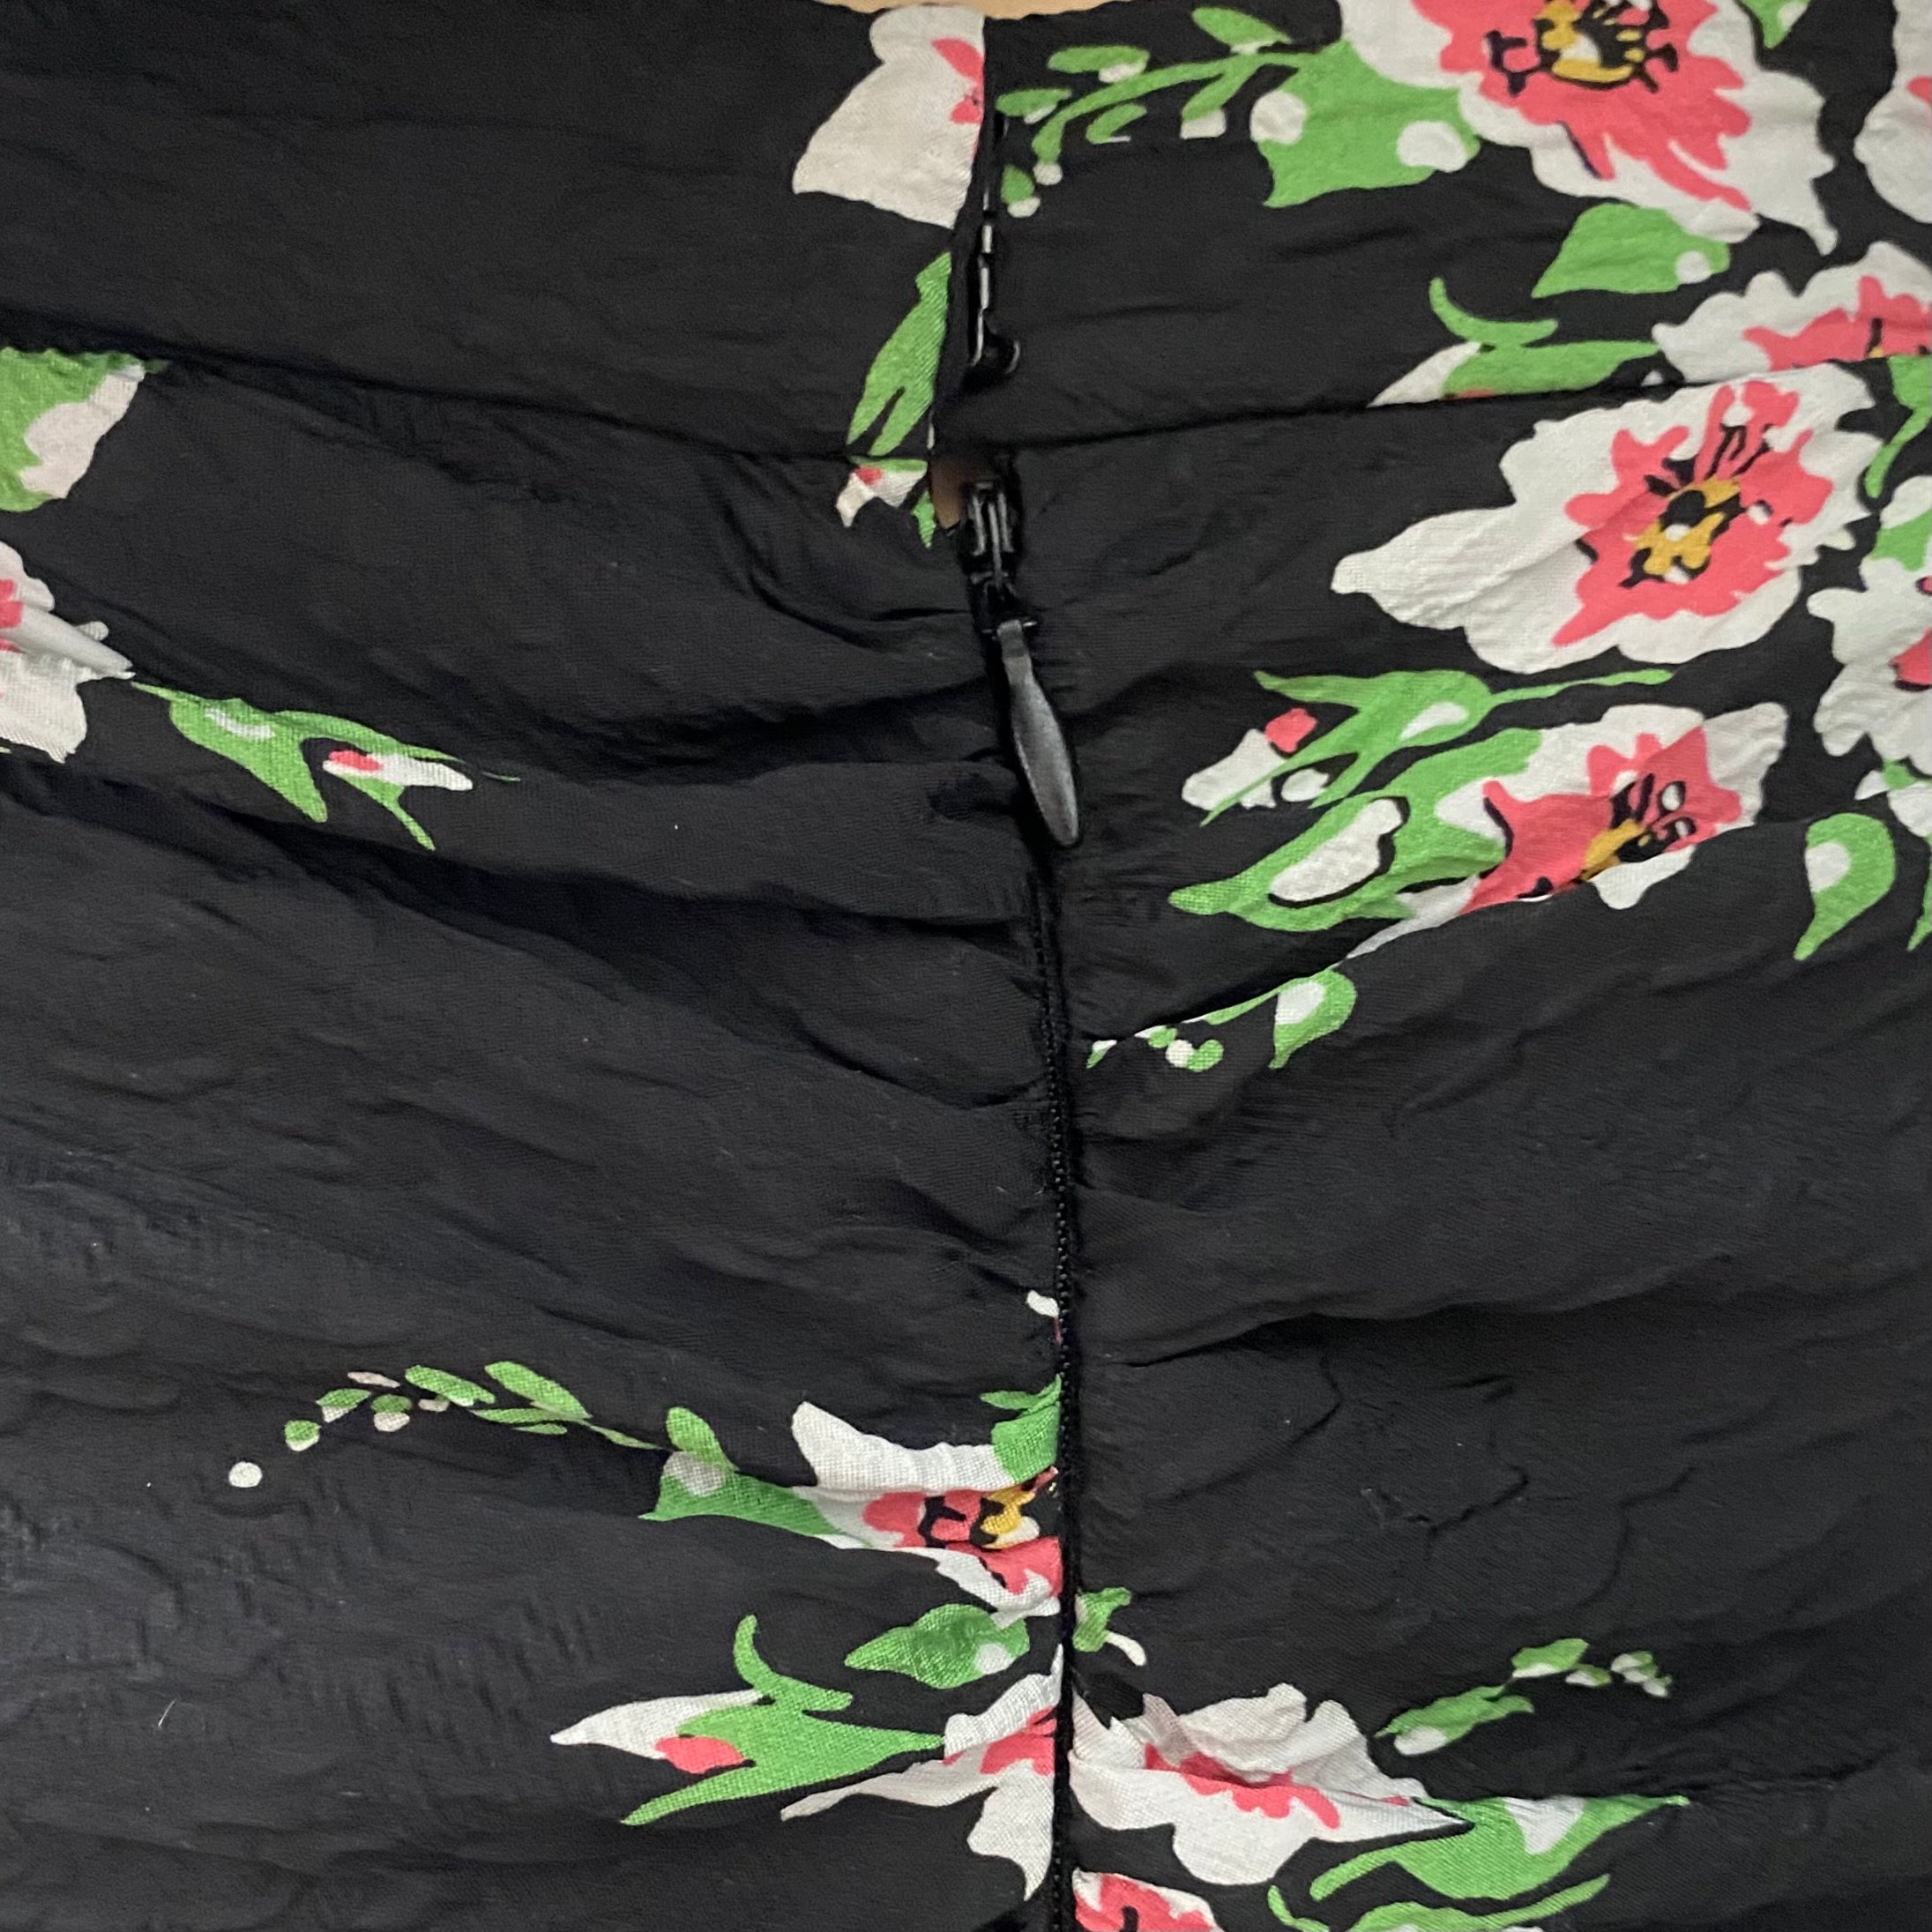 Rodarte Black Floral Ruffle Skirt Set